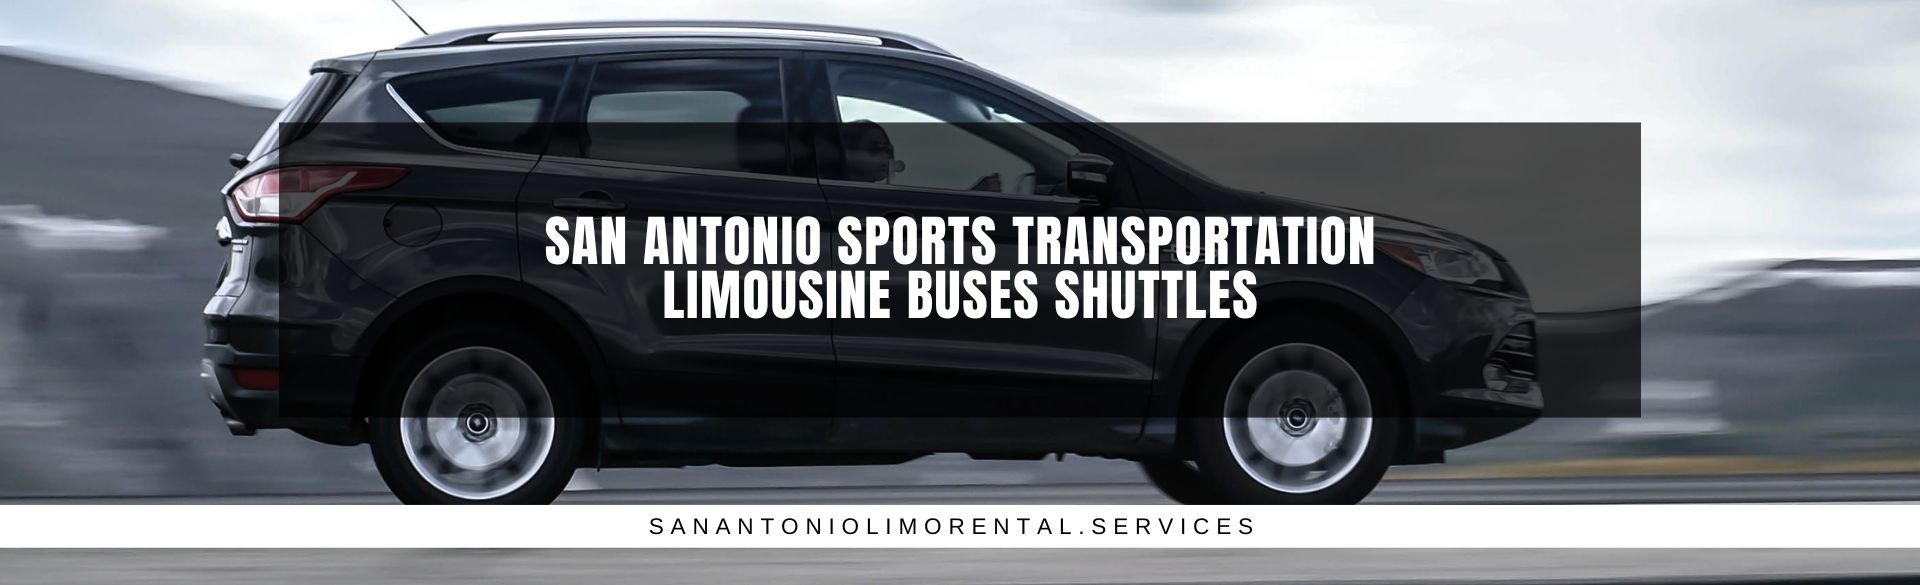 San Antonio Sports Transportation Limousine Buses Shuttles